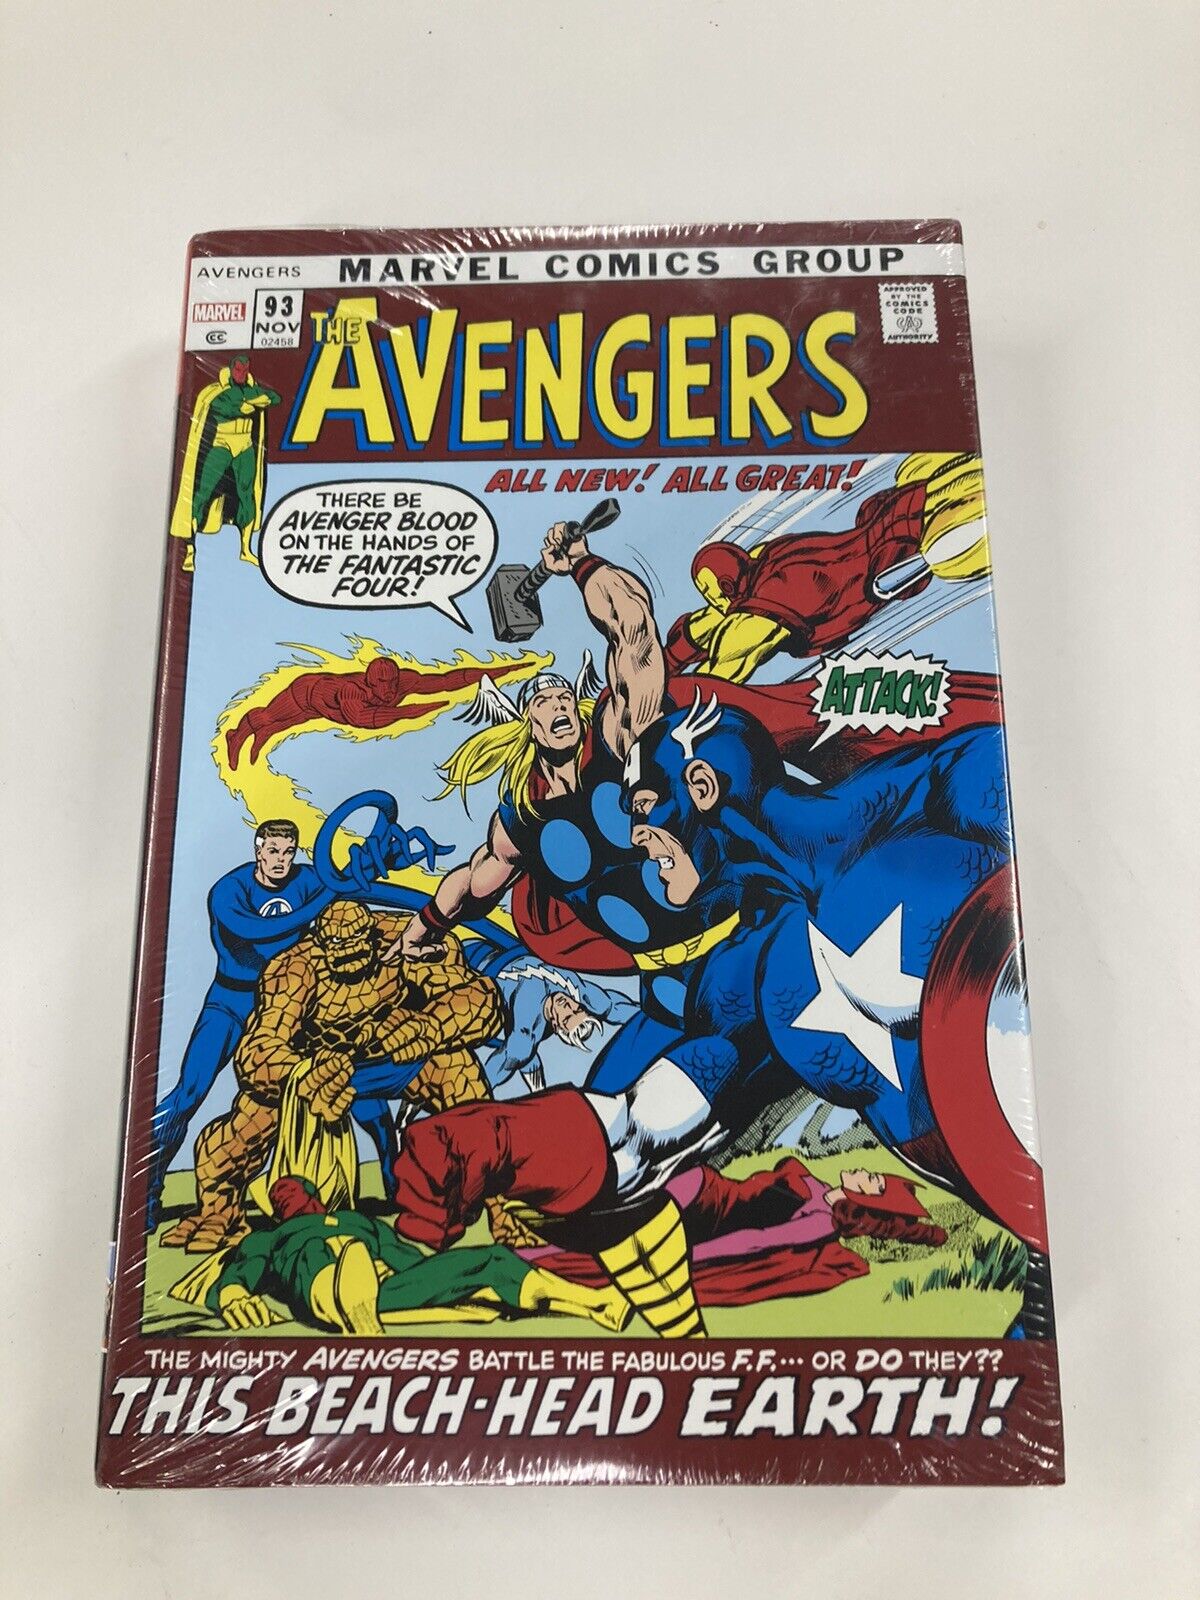 DAMAGED Avengers Omnibus Vol 4 NEAL ADAMS DM COVER Printing Marvel Sealed